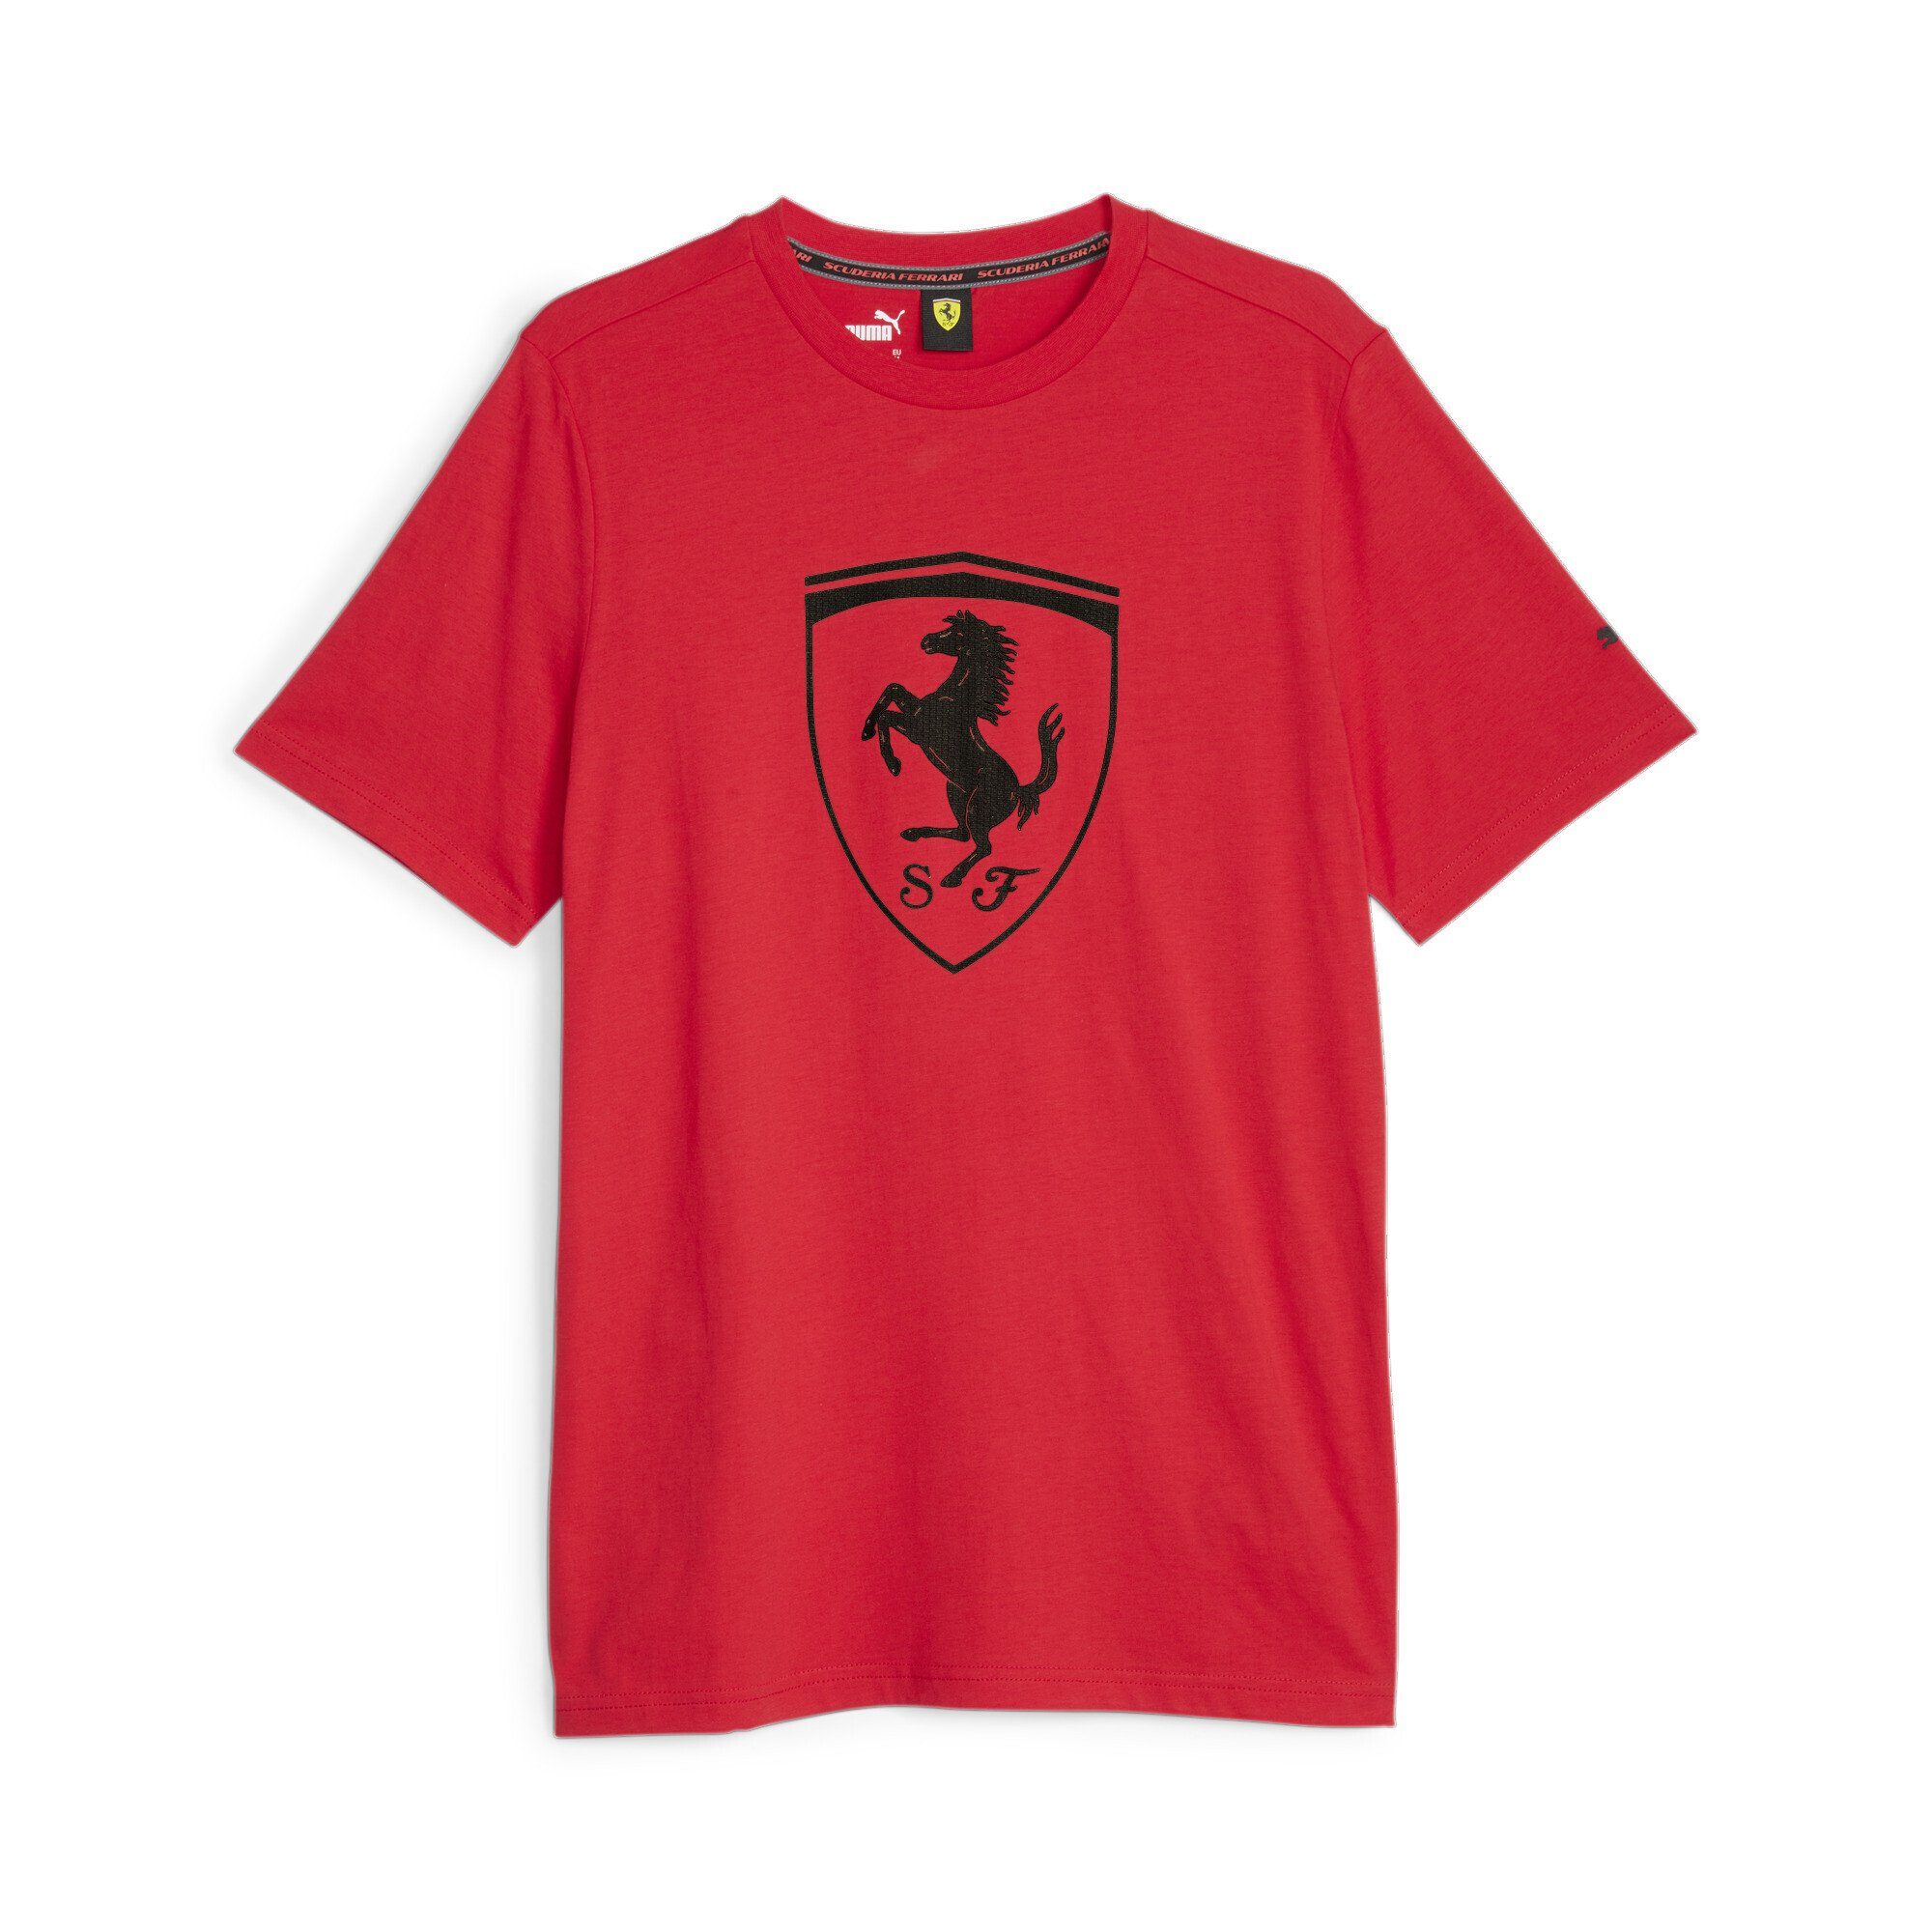 PUMA T-Shirt Scuderia Ferrari Race Big Shield Motorsport T-Shirt Herren Rosso Corsa Red